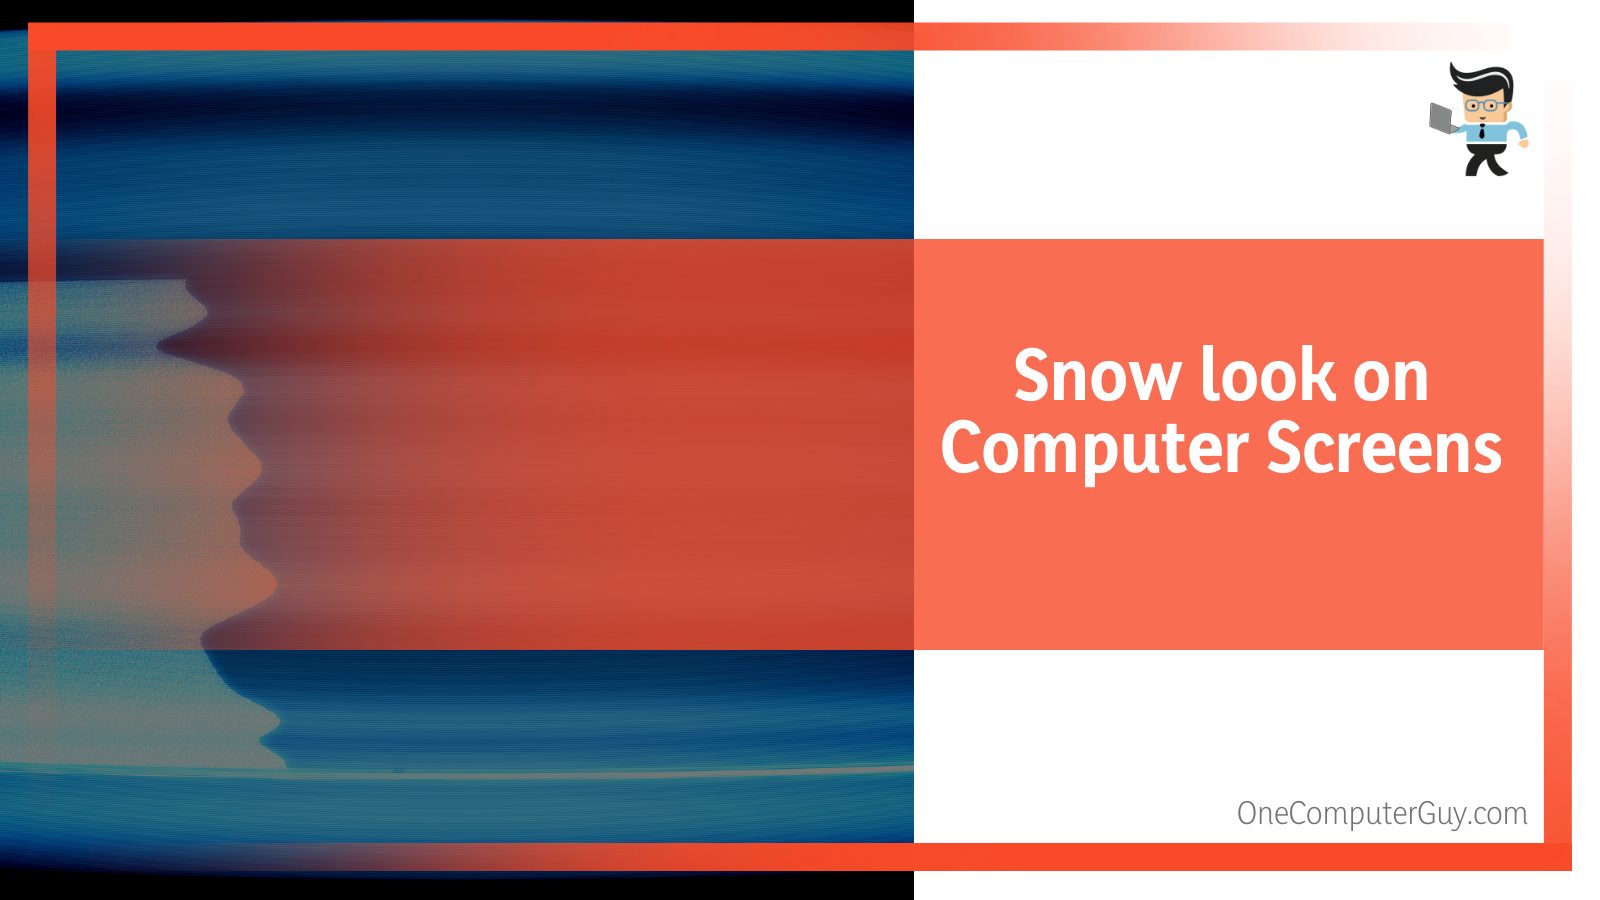 Snow look on Computer Screens